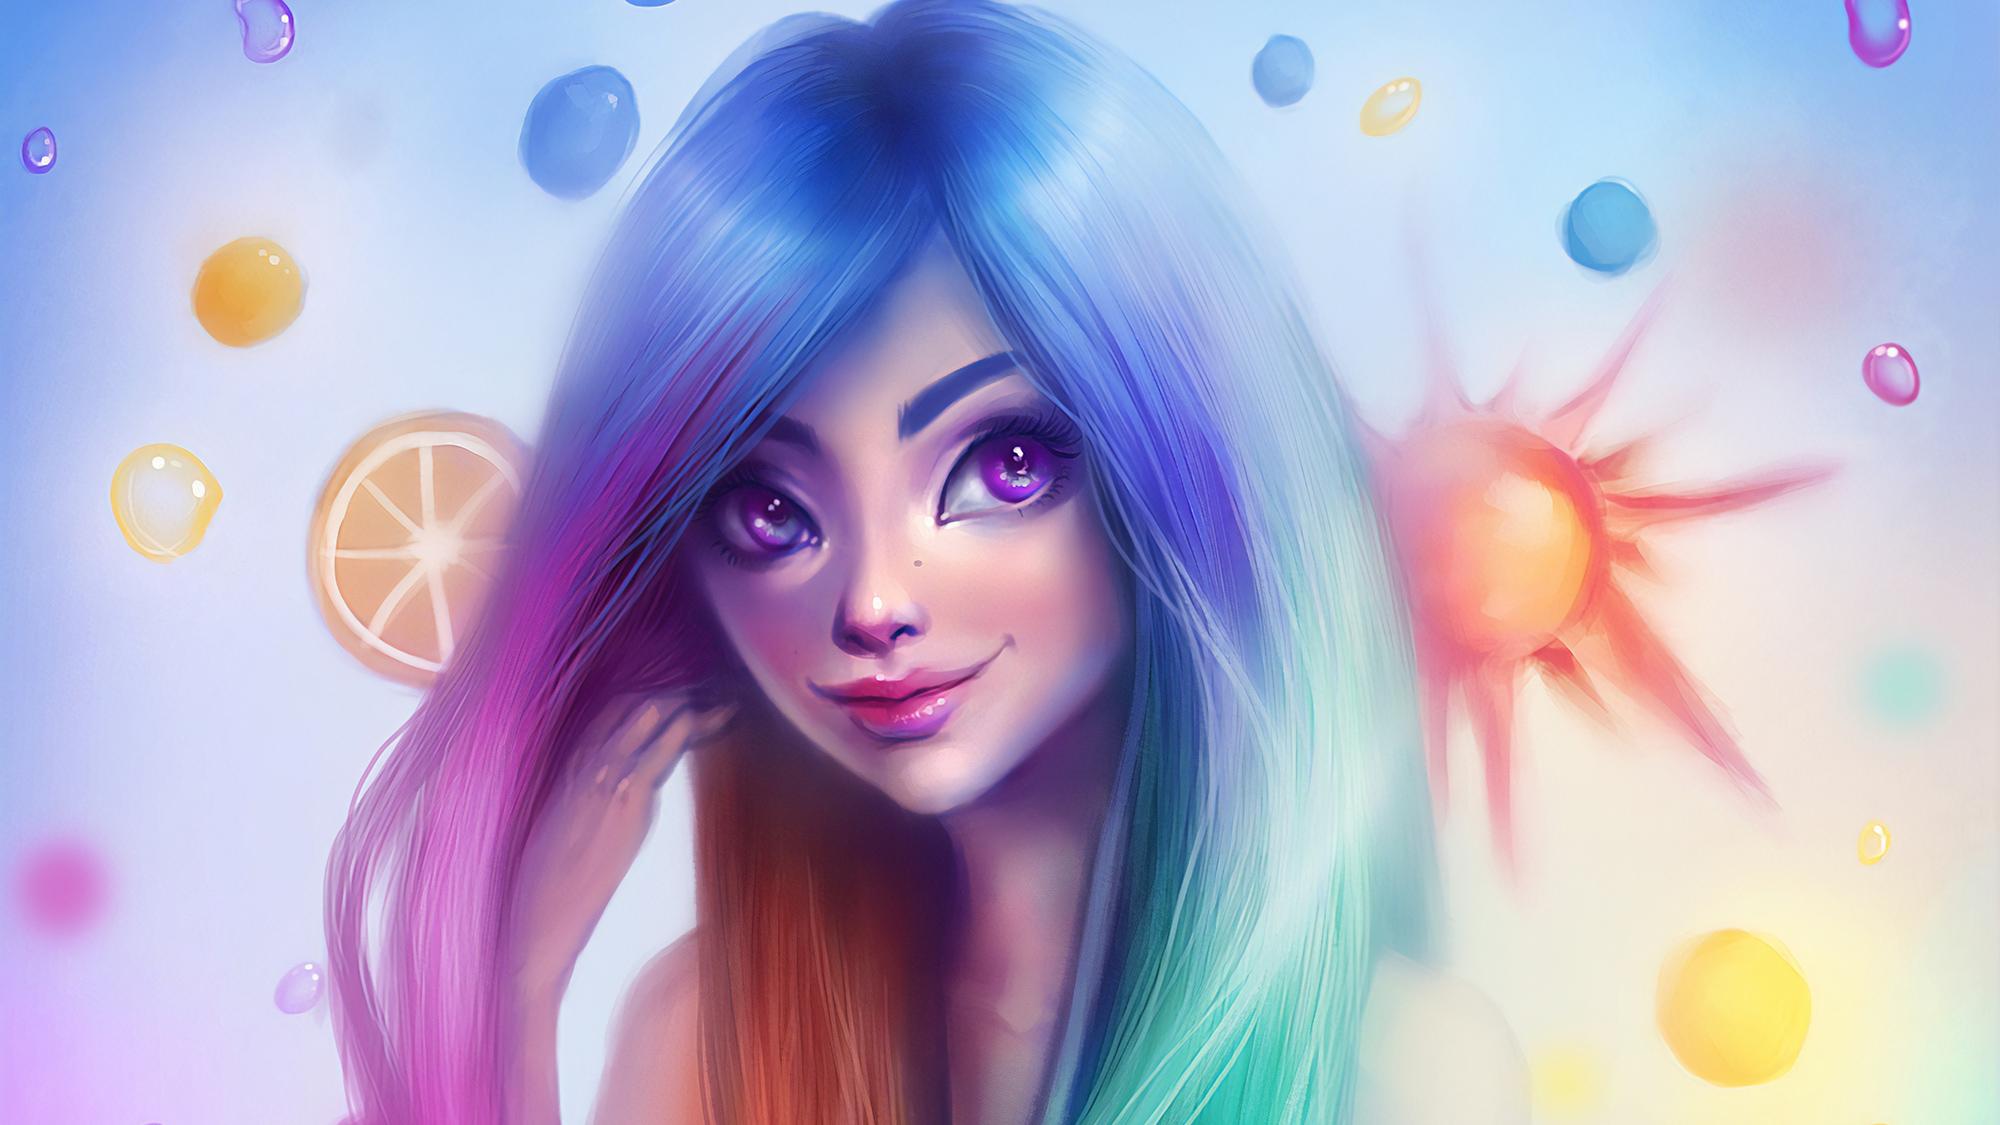 Rainbow Hair Girl, HD Artist, 4k Wallpaper, Image, Background